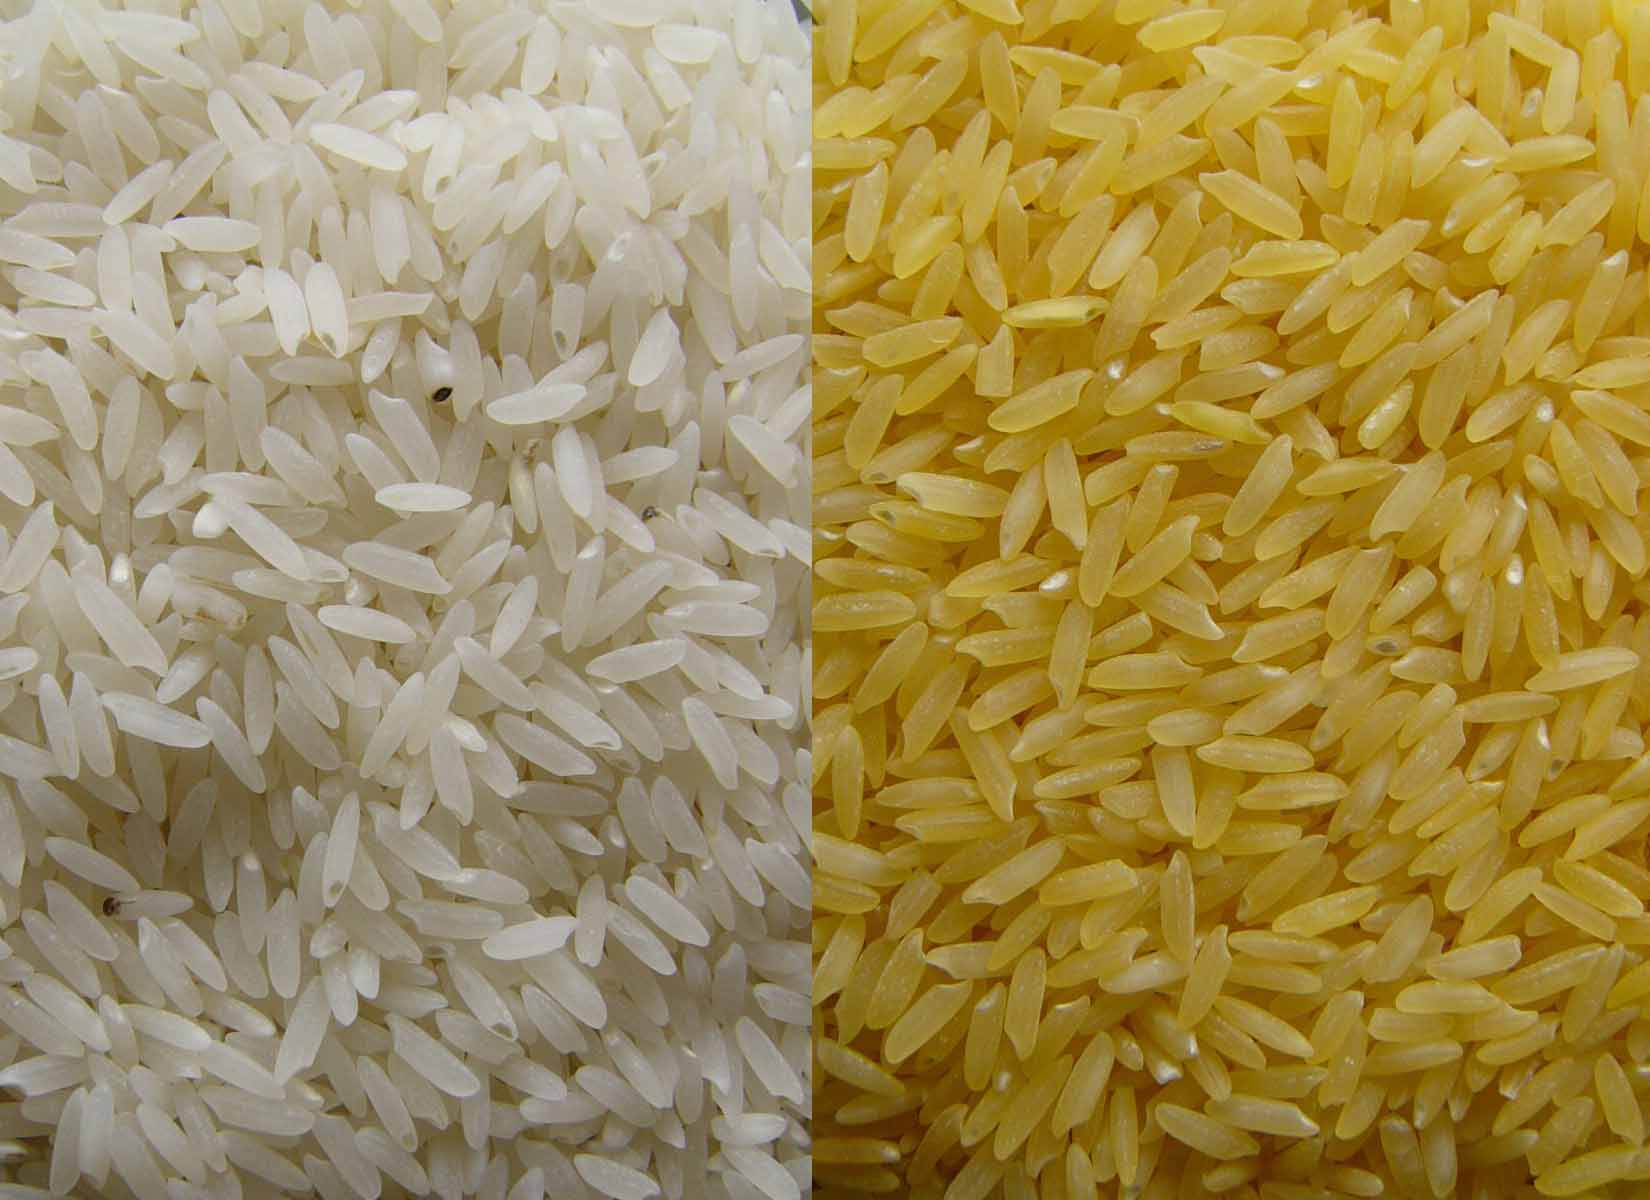 Для плова нужен пропаренный рис. Рис пакистанский Rice. Рис для плова длиннозерный. Пропаренный рис для плова. Рис басмати пропаренный для плова.